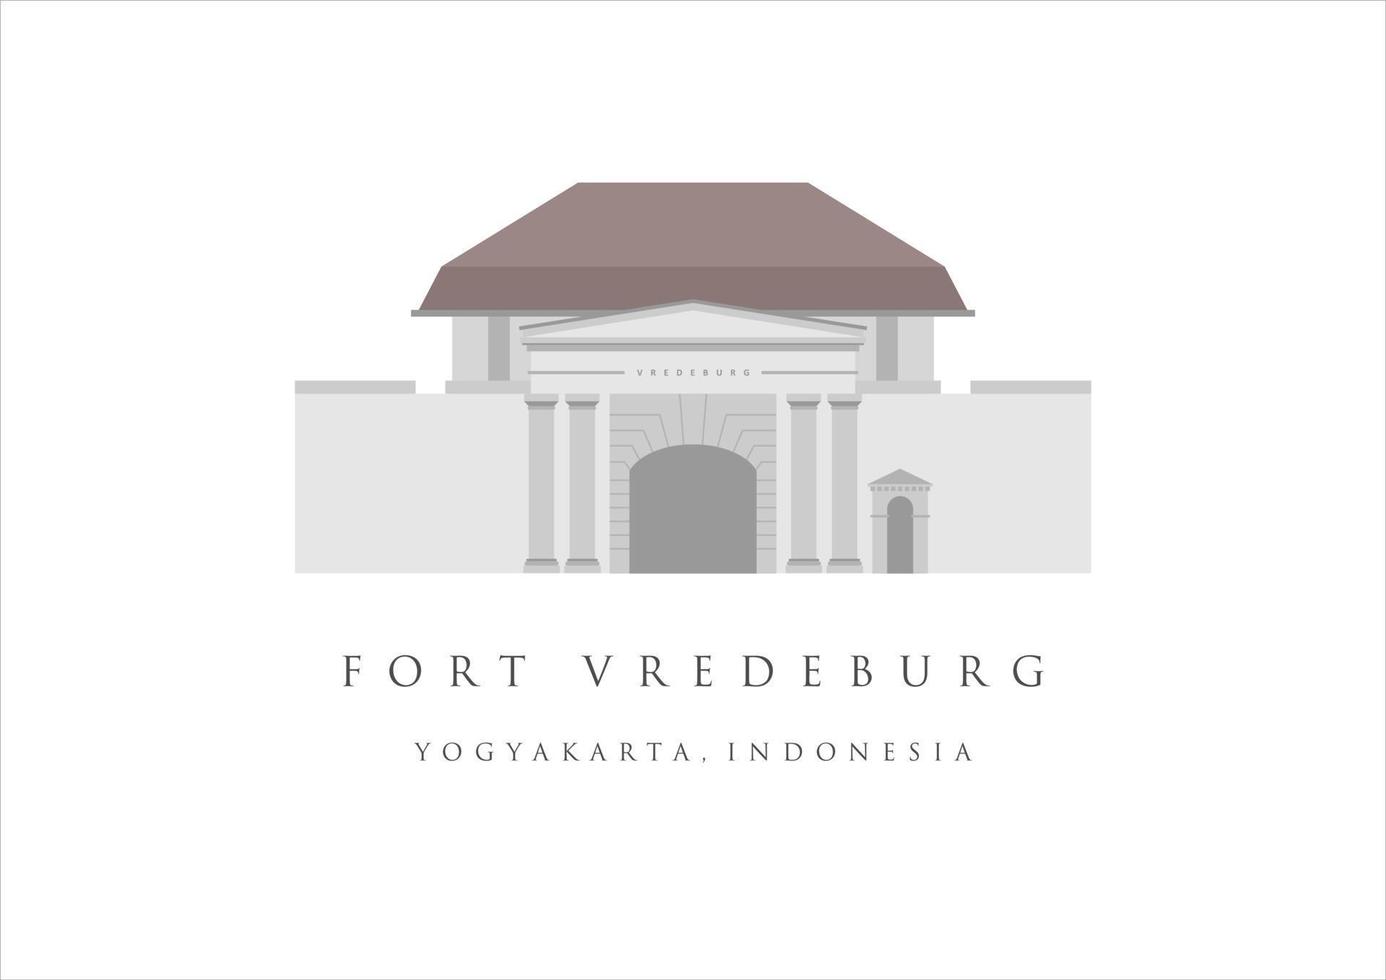 Fort Vredeburg or Benteng Vredeburg landmark building of Yogyakarta. Heritage tourism of Indonesia. Jogjakarta old building vector illustration